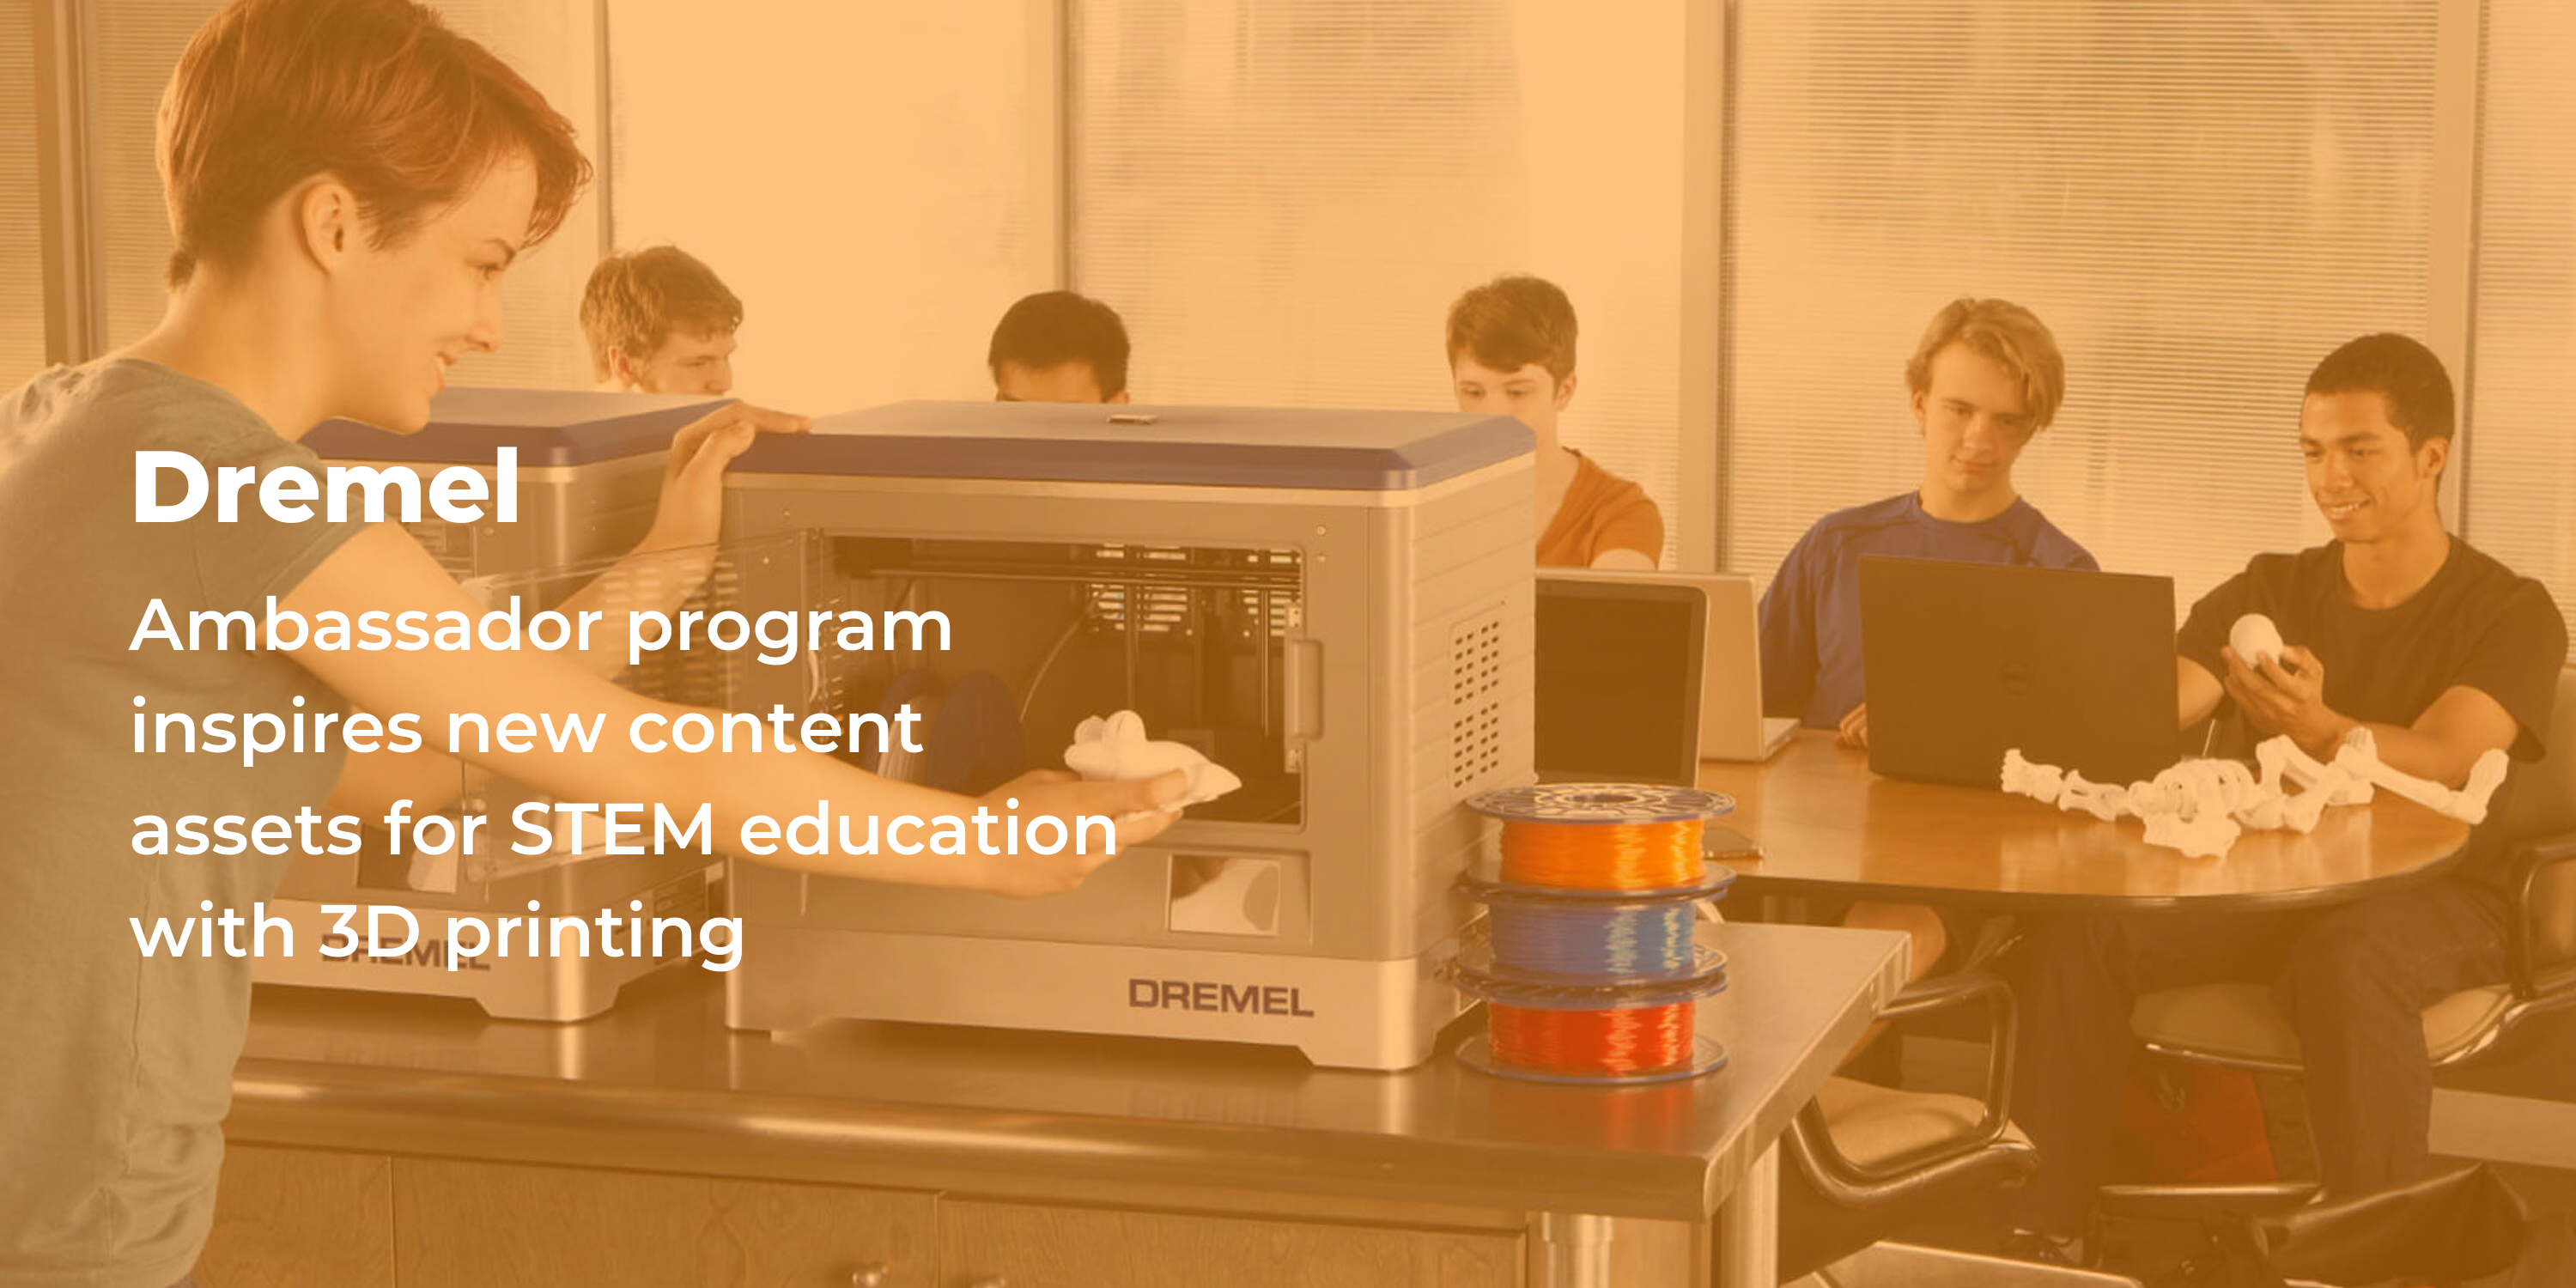 Dremel's ambassador program inspired new content assets for STEM education with 3D printing